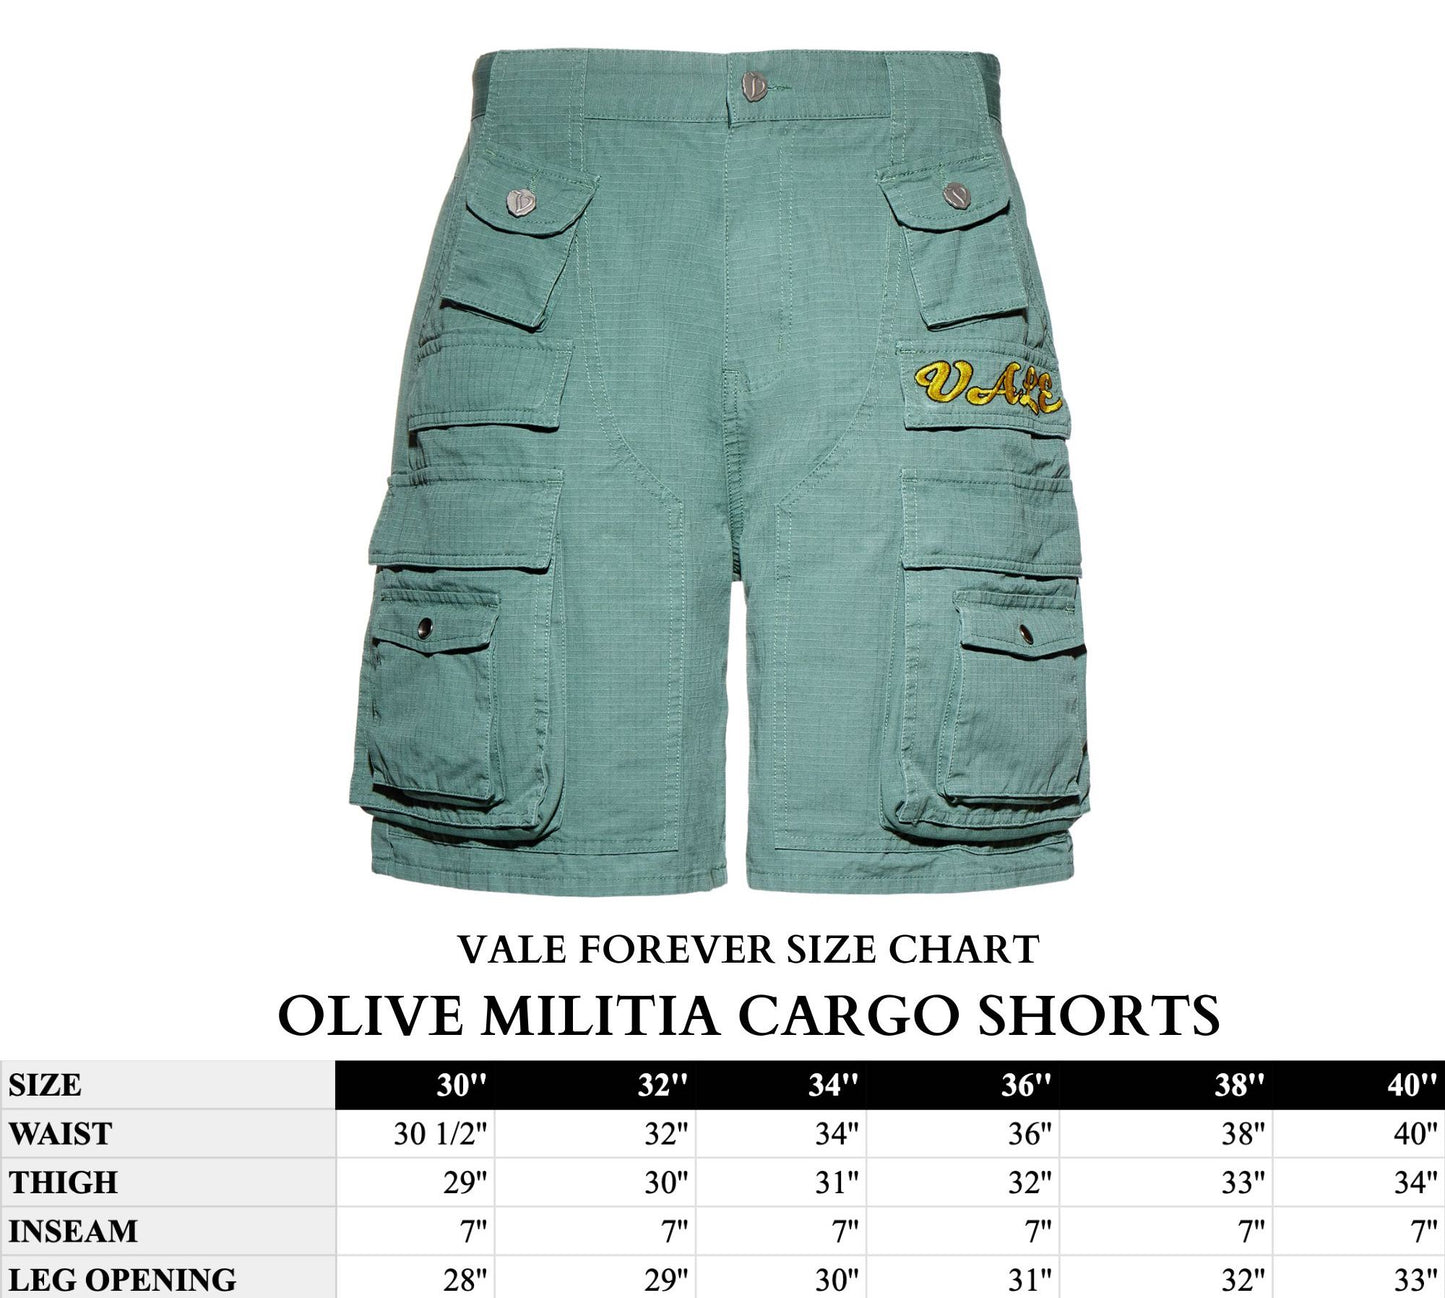 OLIVE MILITIA CARGO SHORTS